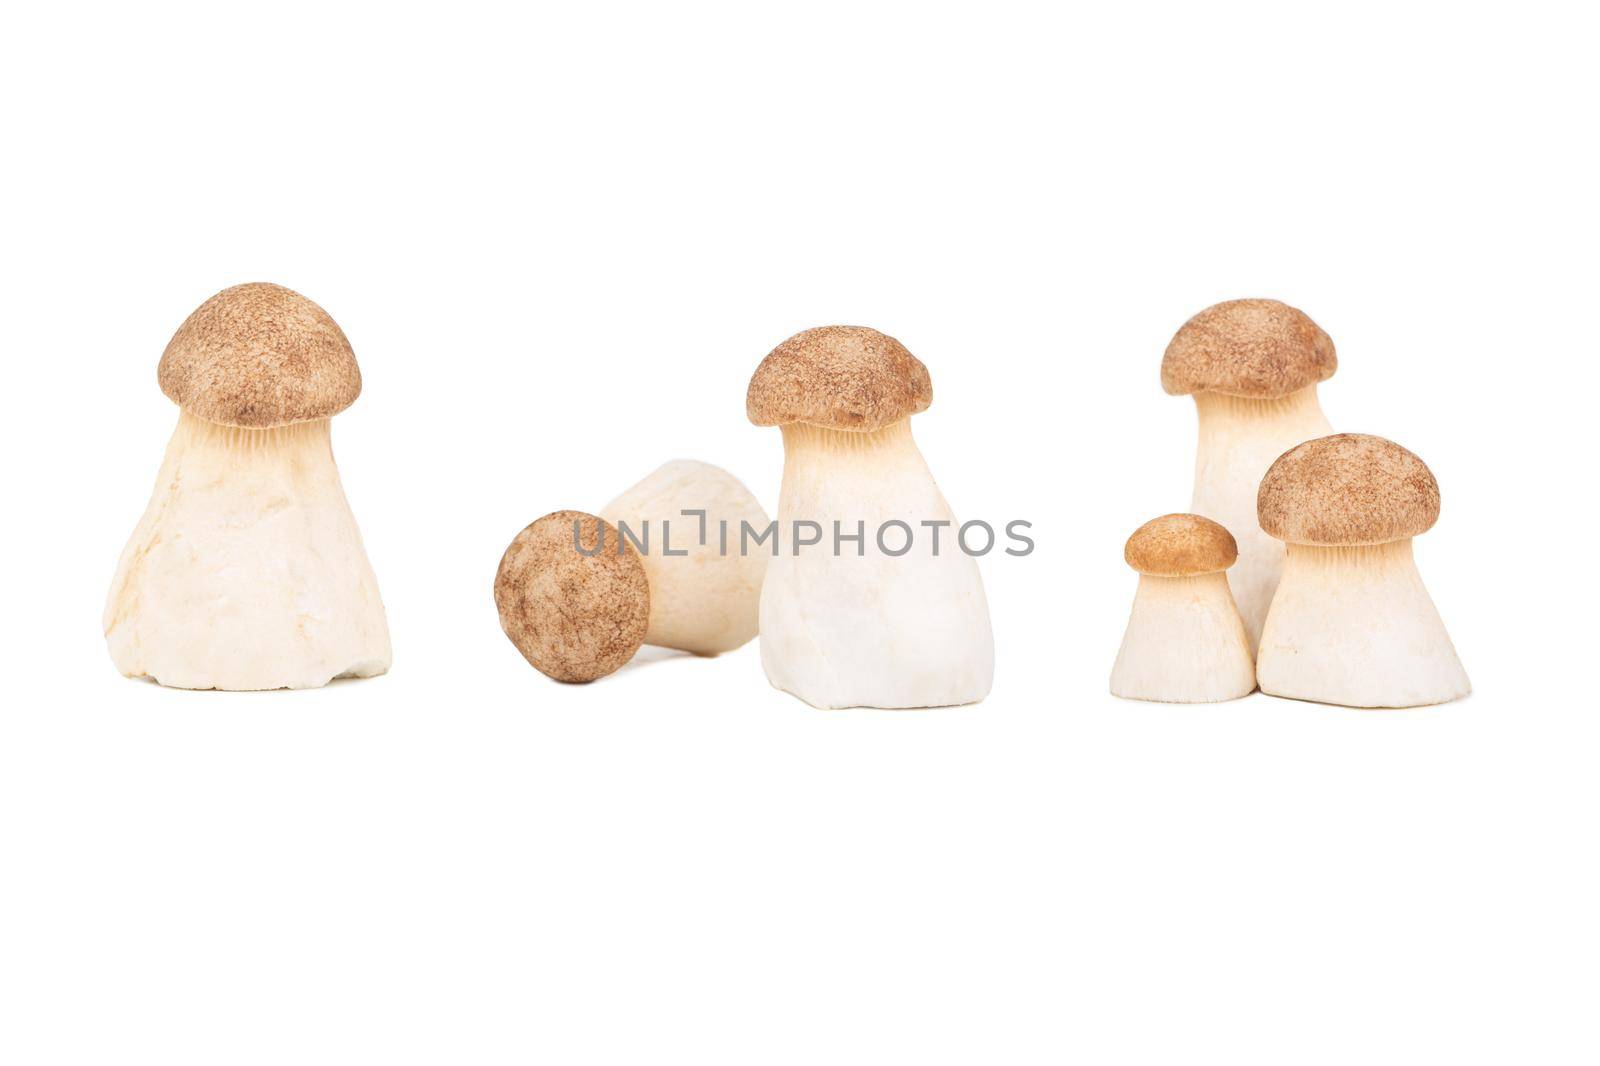 King oyster mushroom Pleurotus eryngii on white background, set